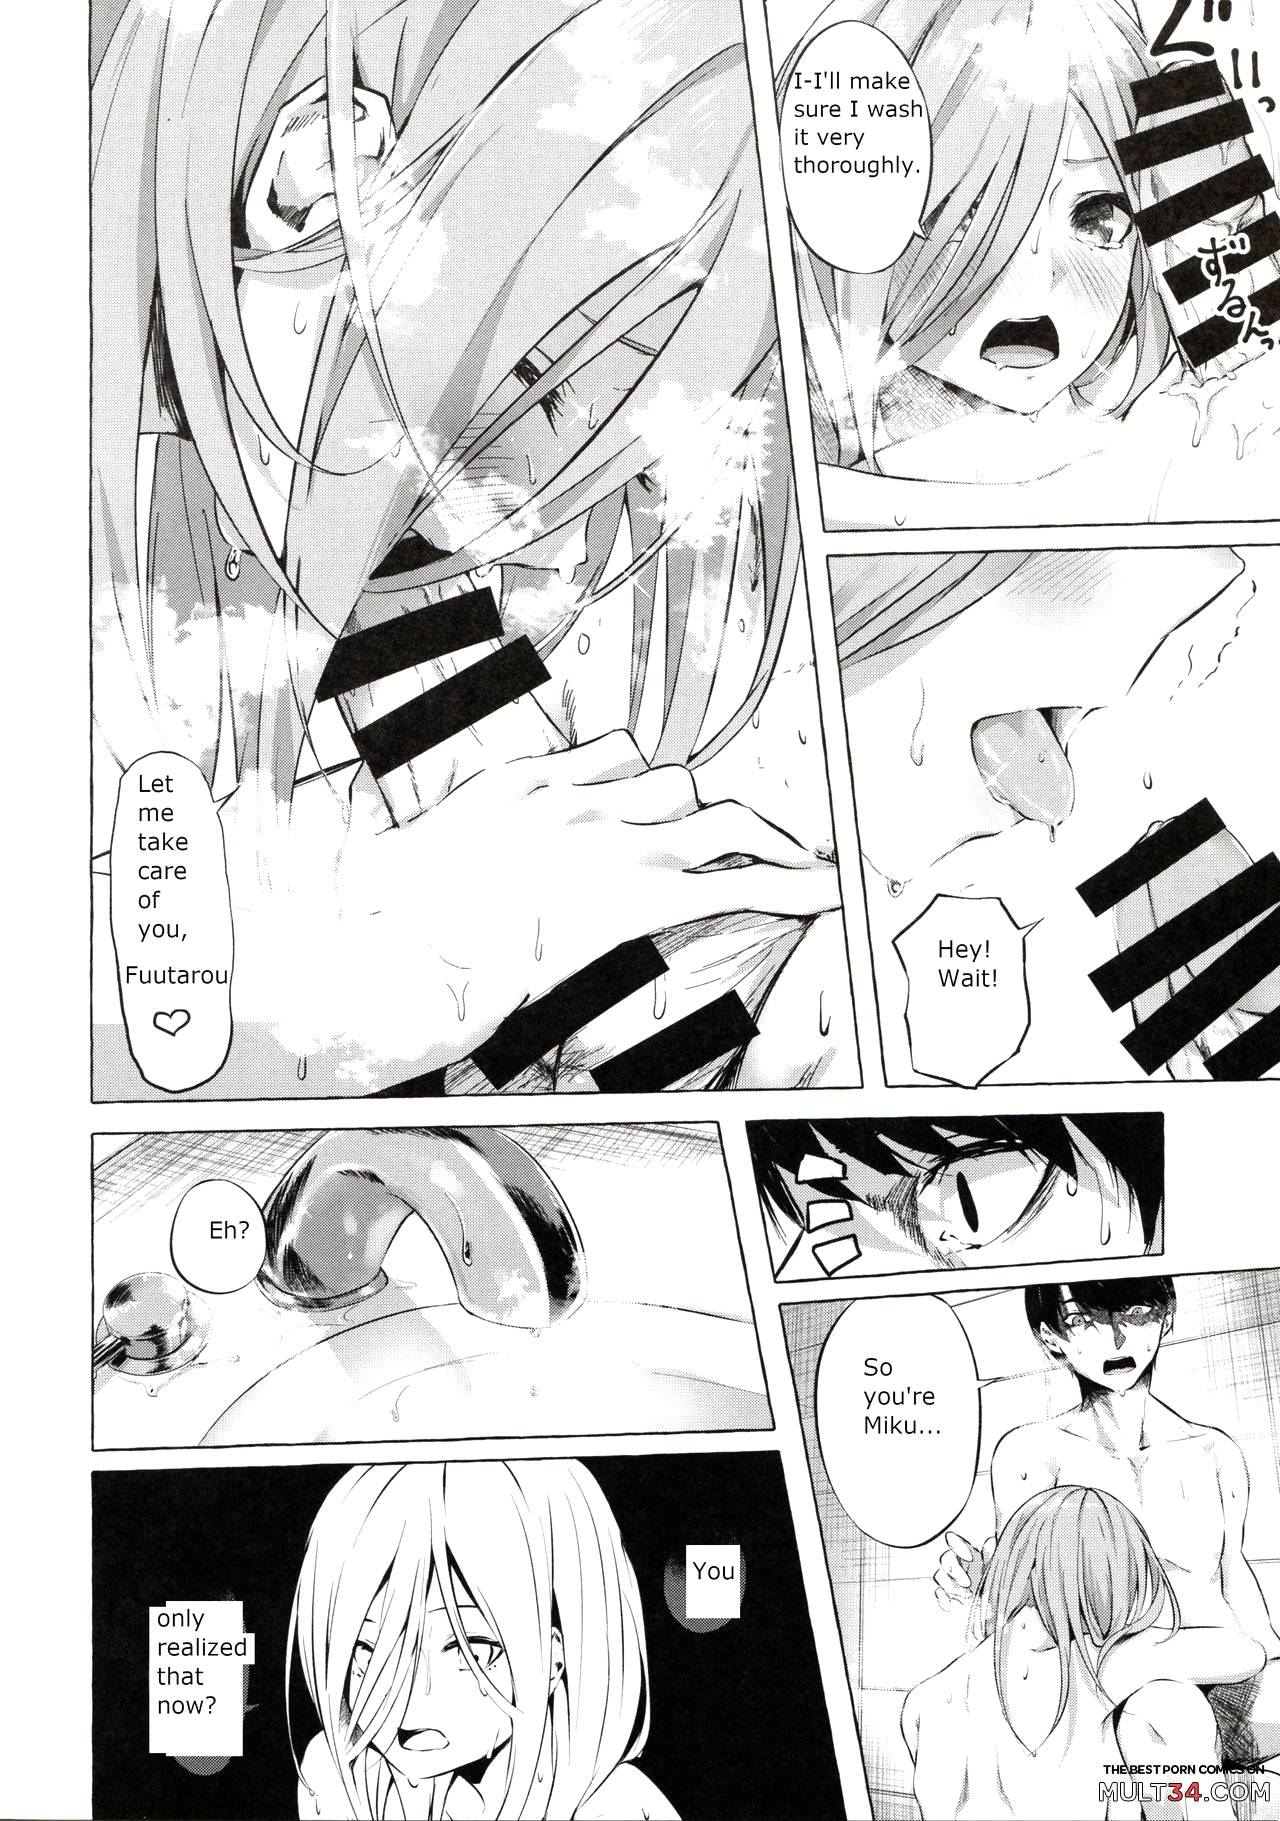 Gotoubun no Sorayume page 5